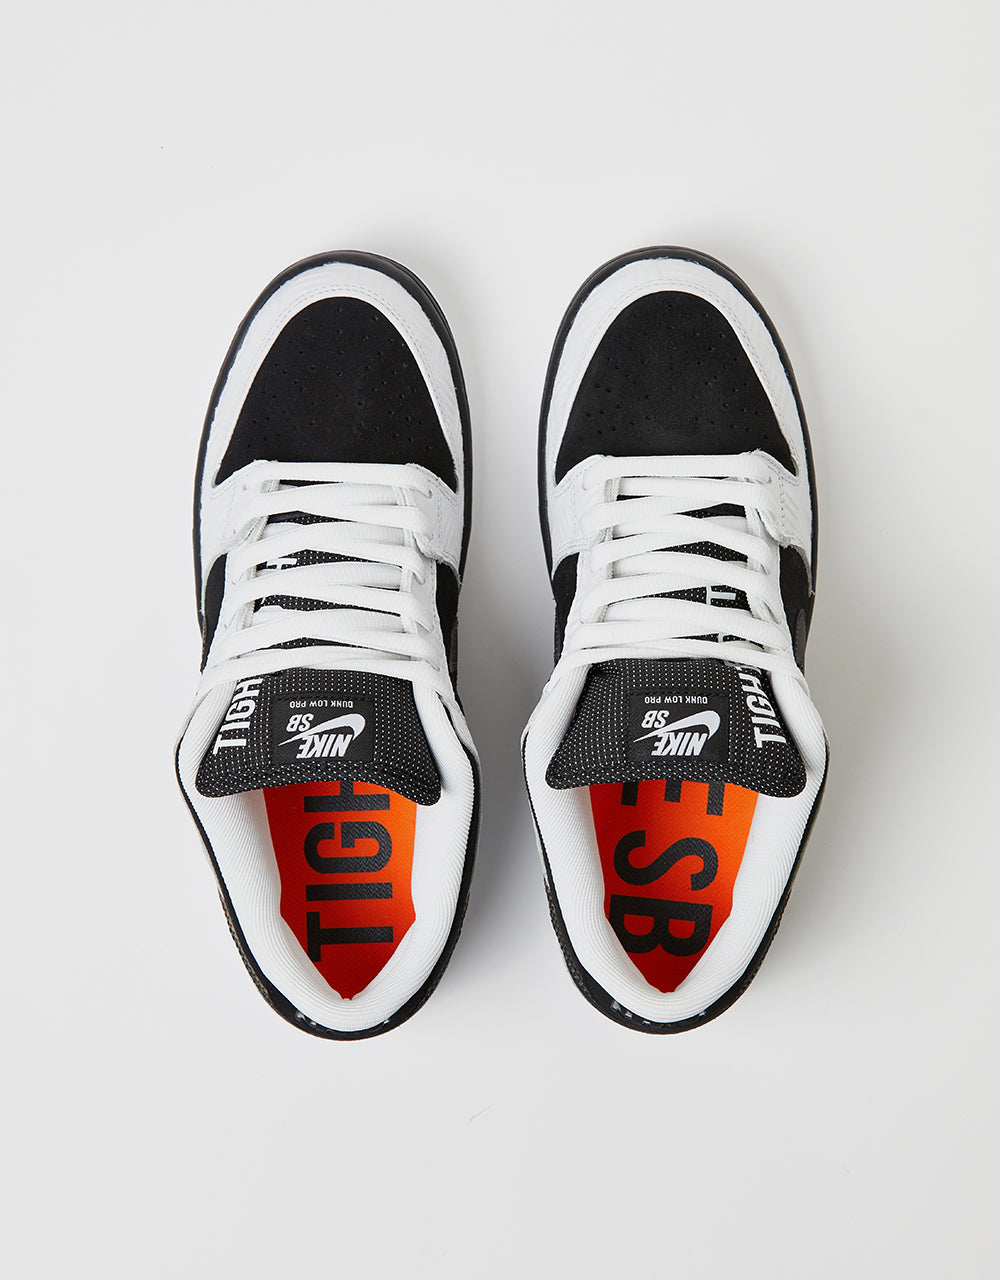 Nike SB 'Tightbooth' Dunk Low QS Skate Shoes - White/Black-Safety Orange